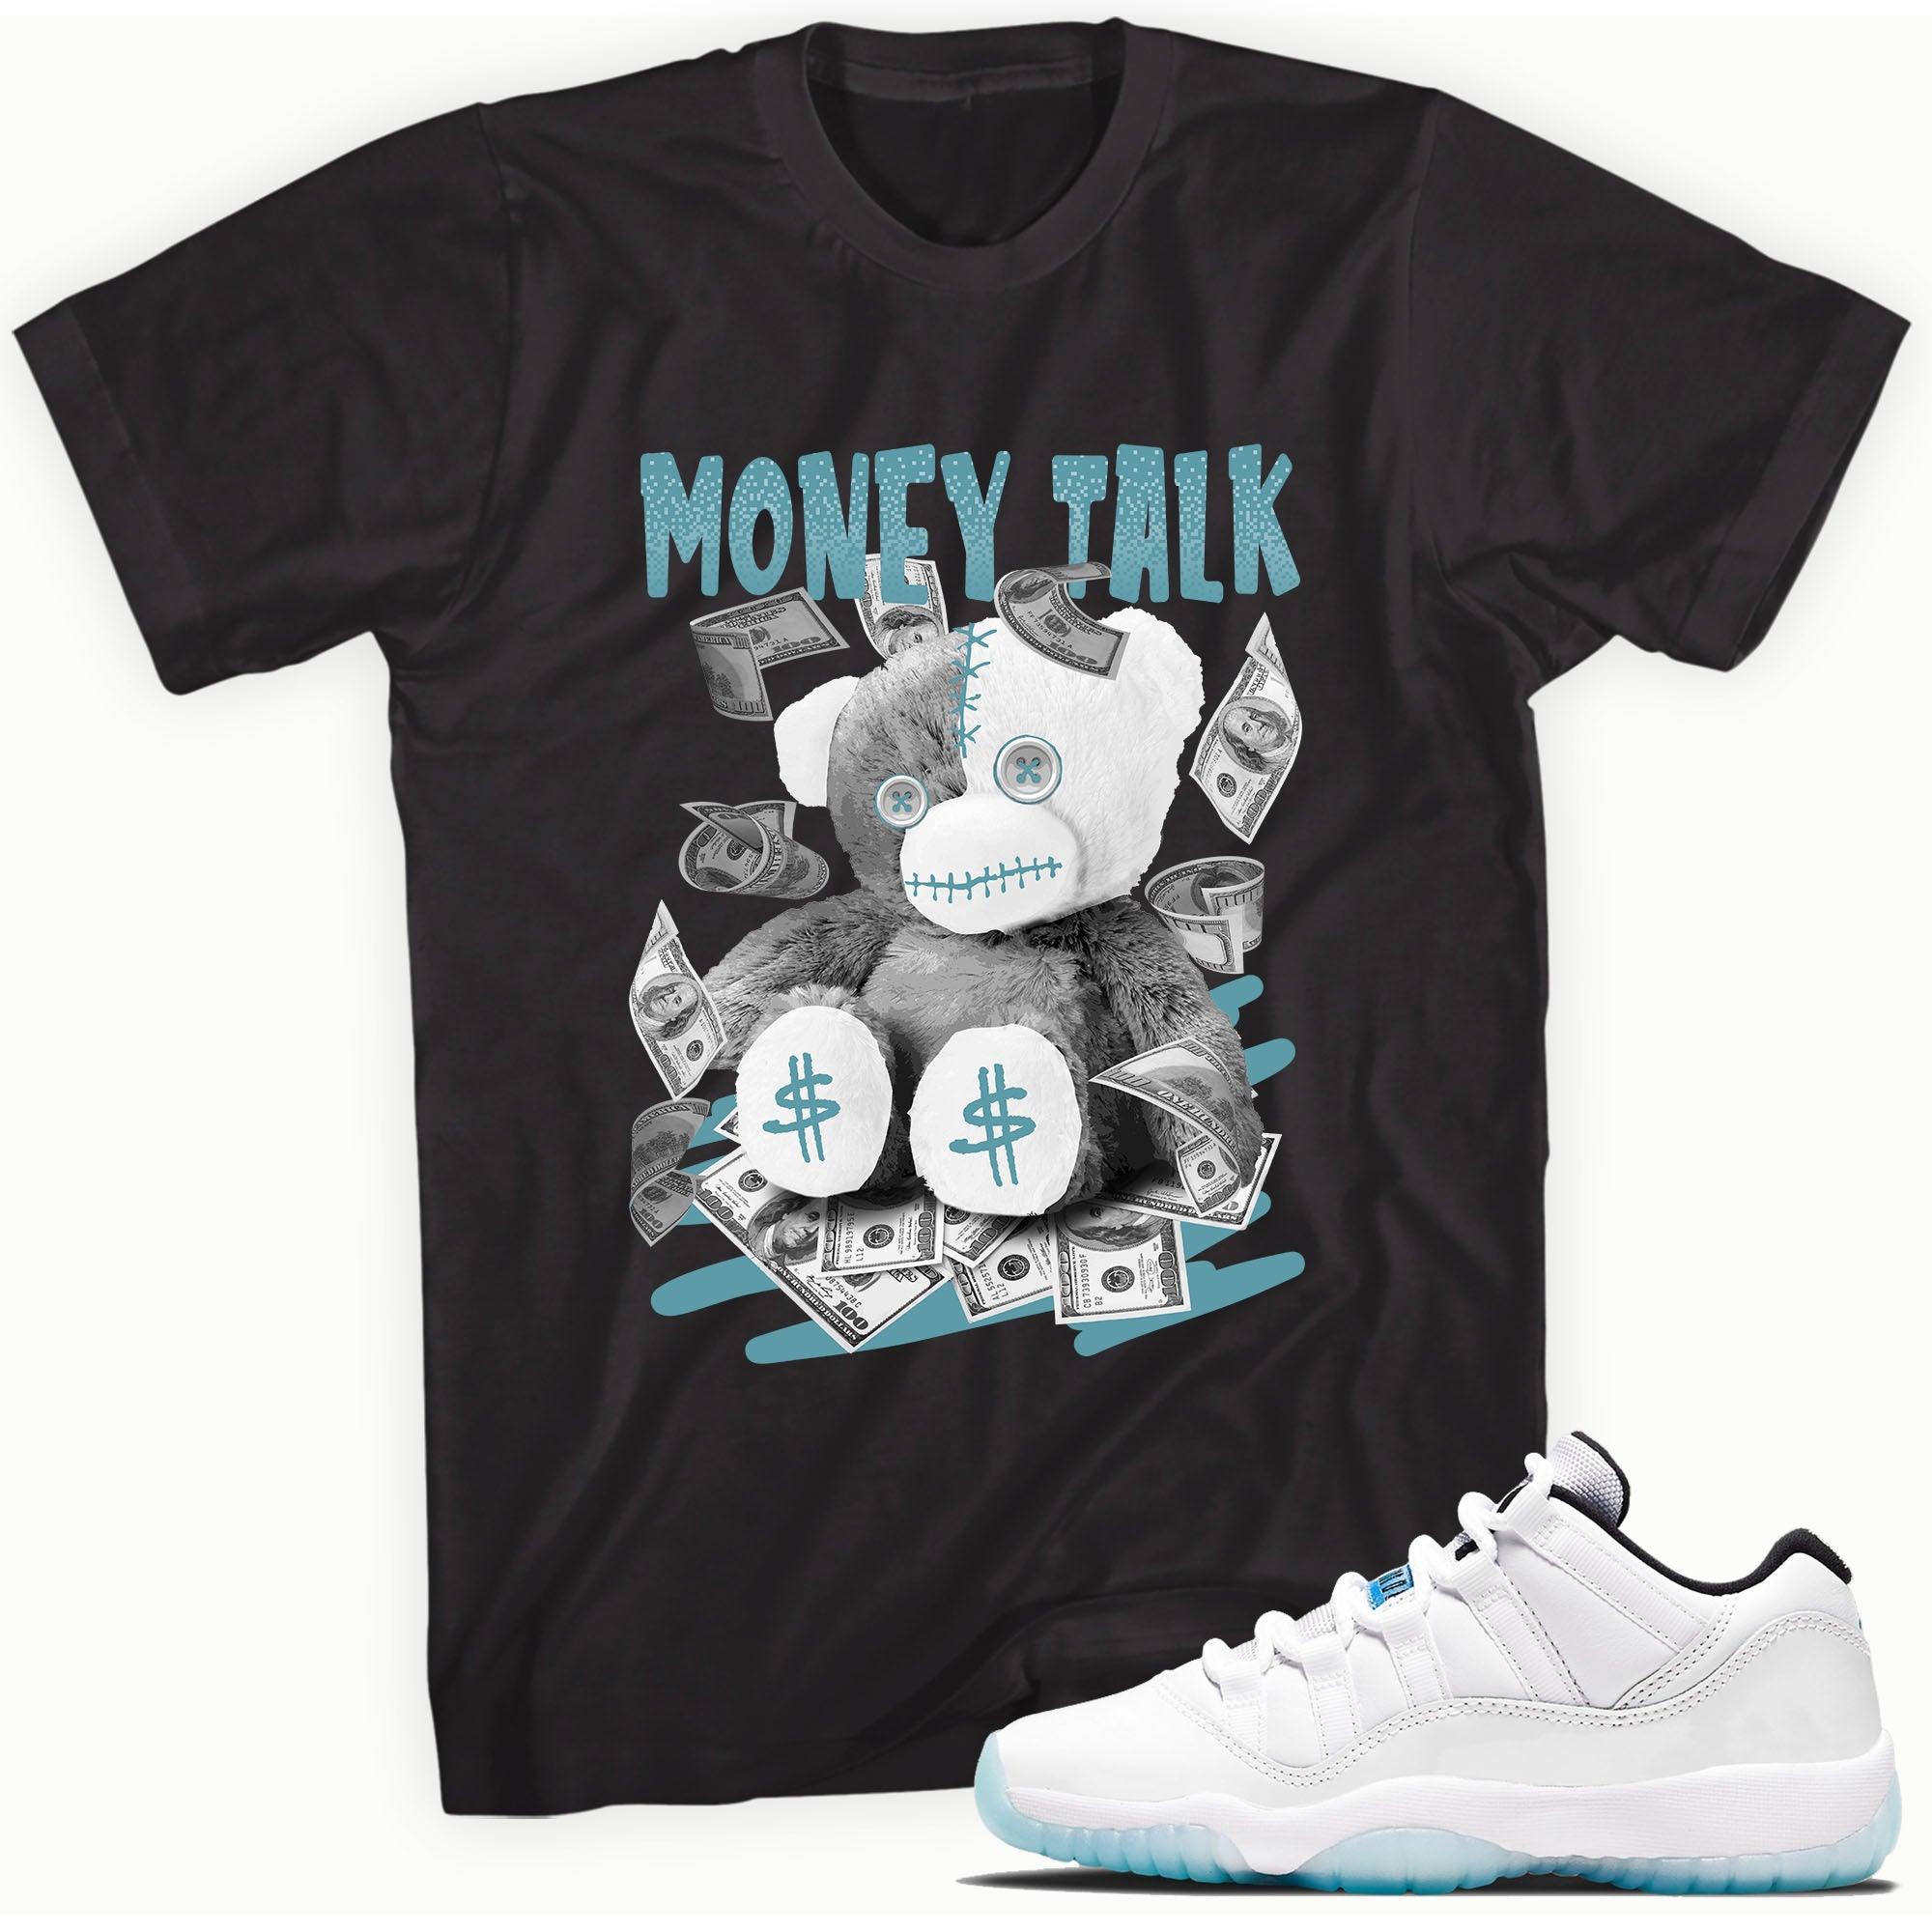 Money Talk Sneaker Tee Air Jordan 11 Retro Low Legend Blue photo